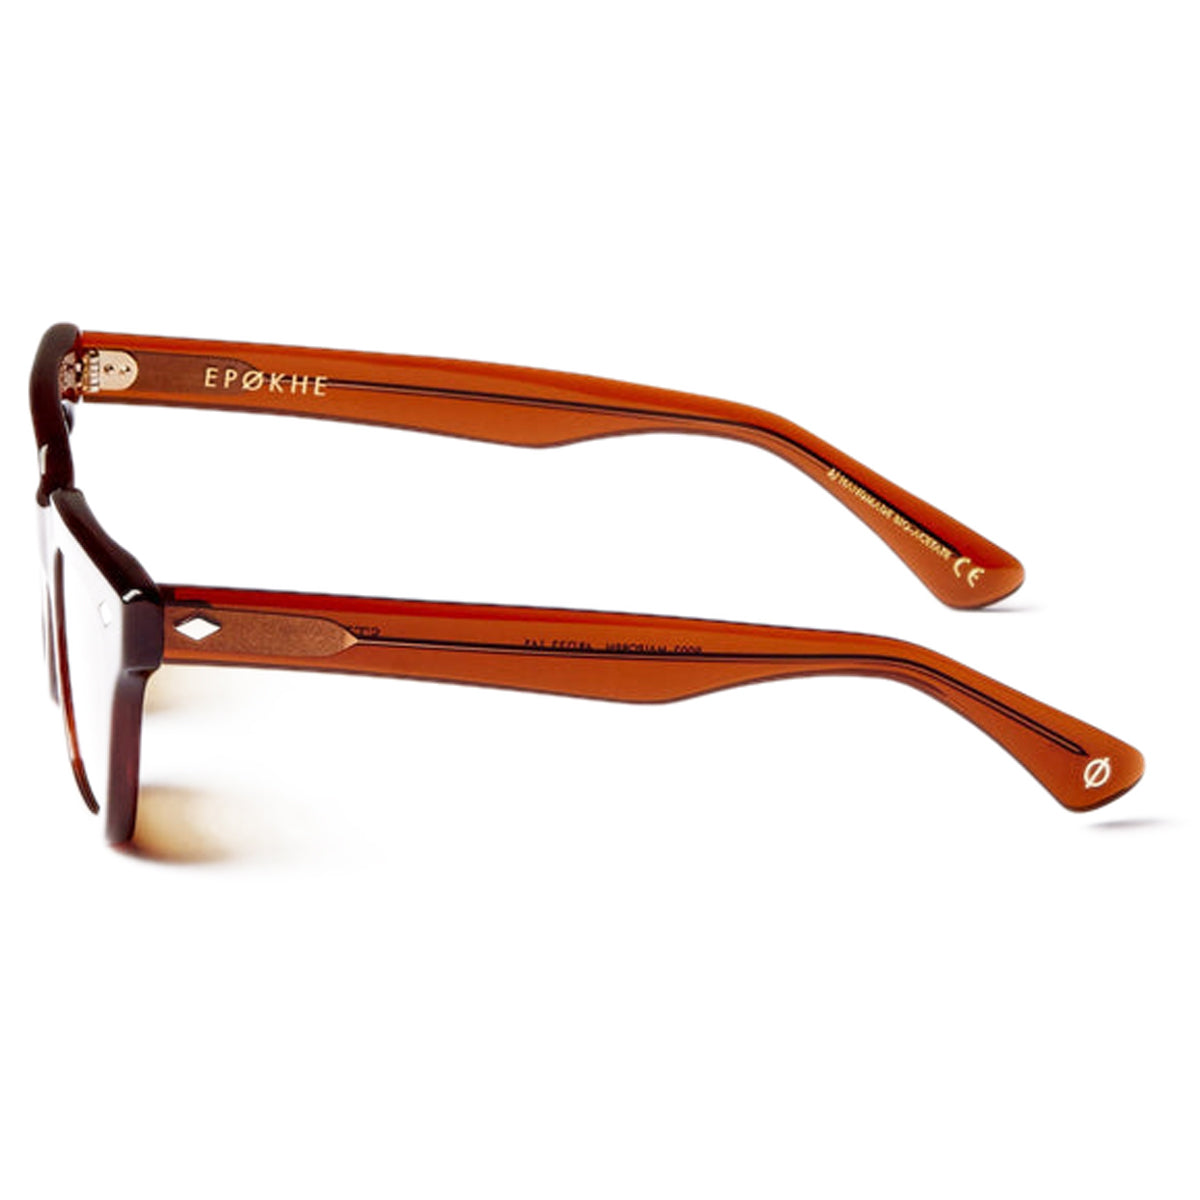 Epokhe Stereo Sunglasses - Maple Polished/Brown image 4